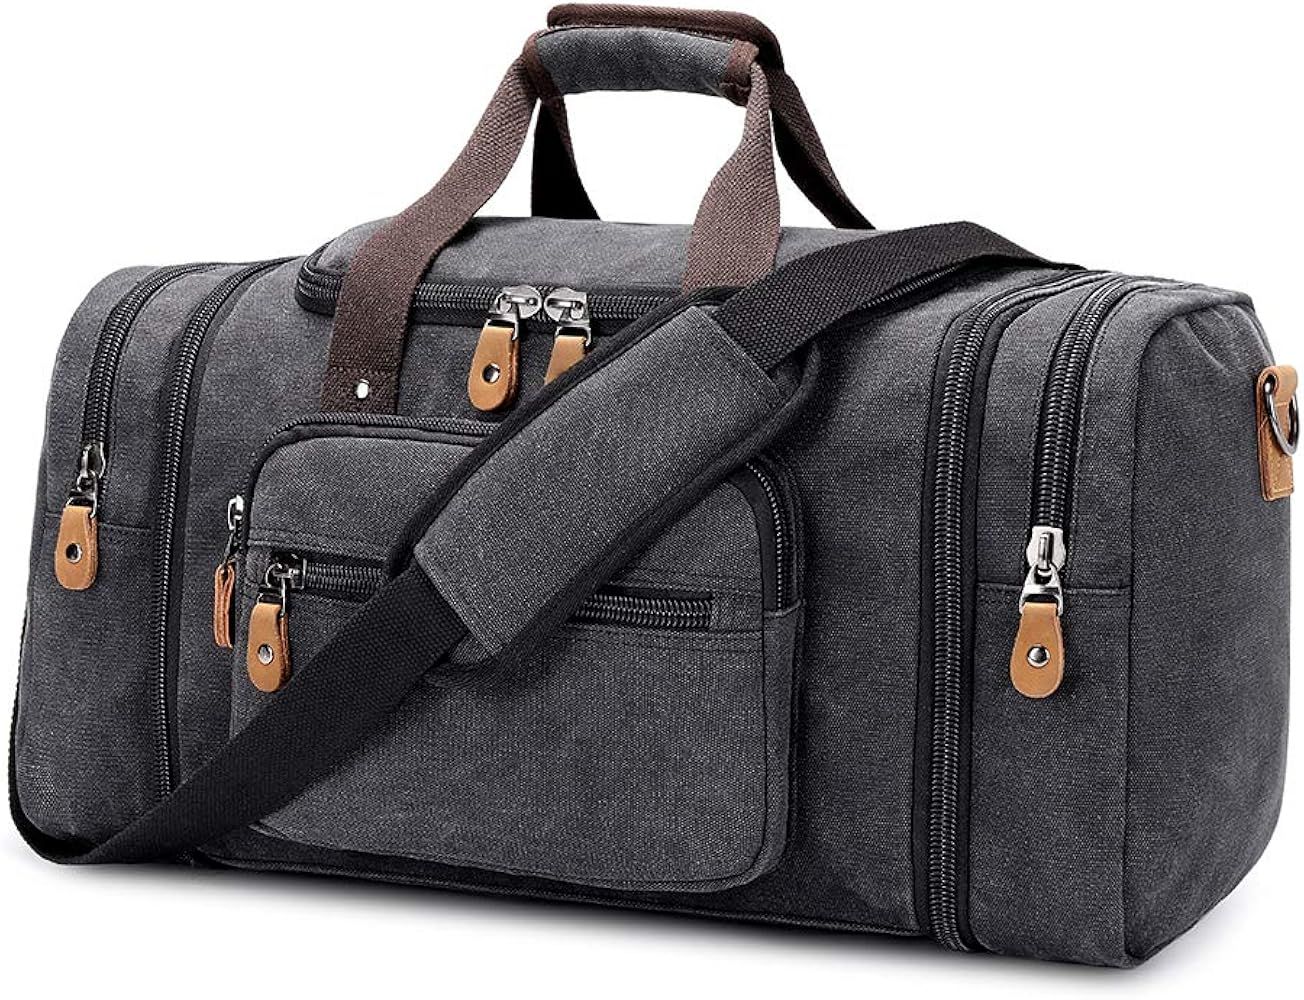 Plambag Canvas Duffle Bag for Travel 50L/60L Duffel Overnight Weekender Bag | Amazon (US)